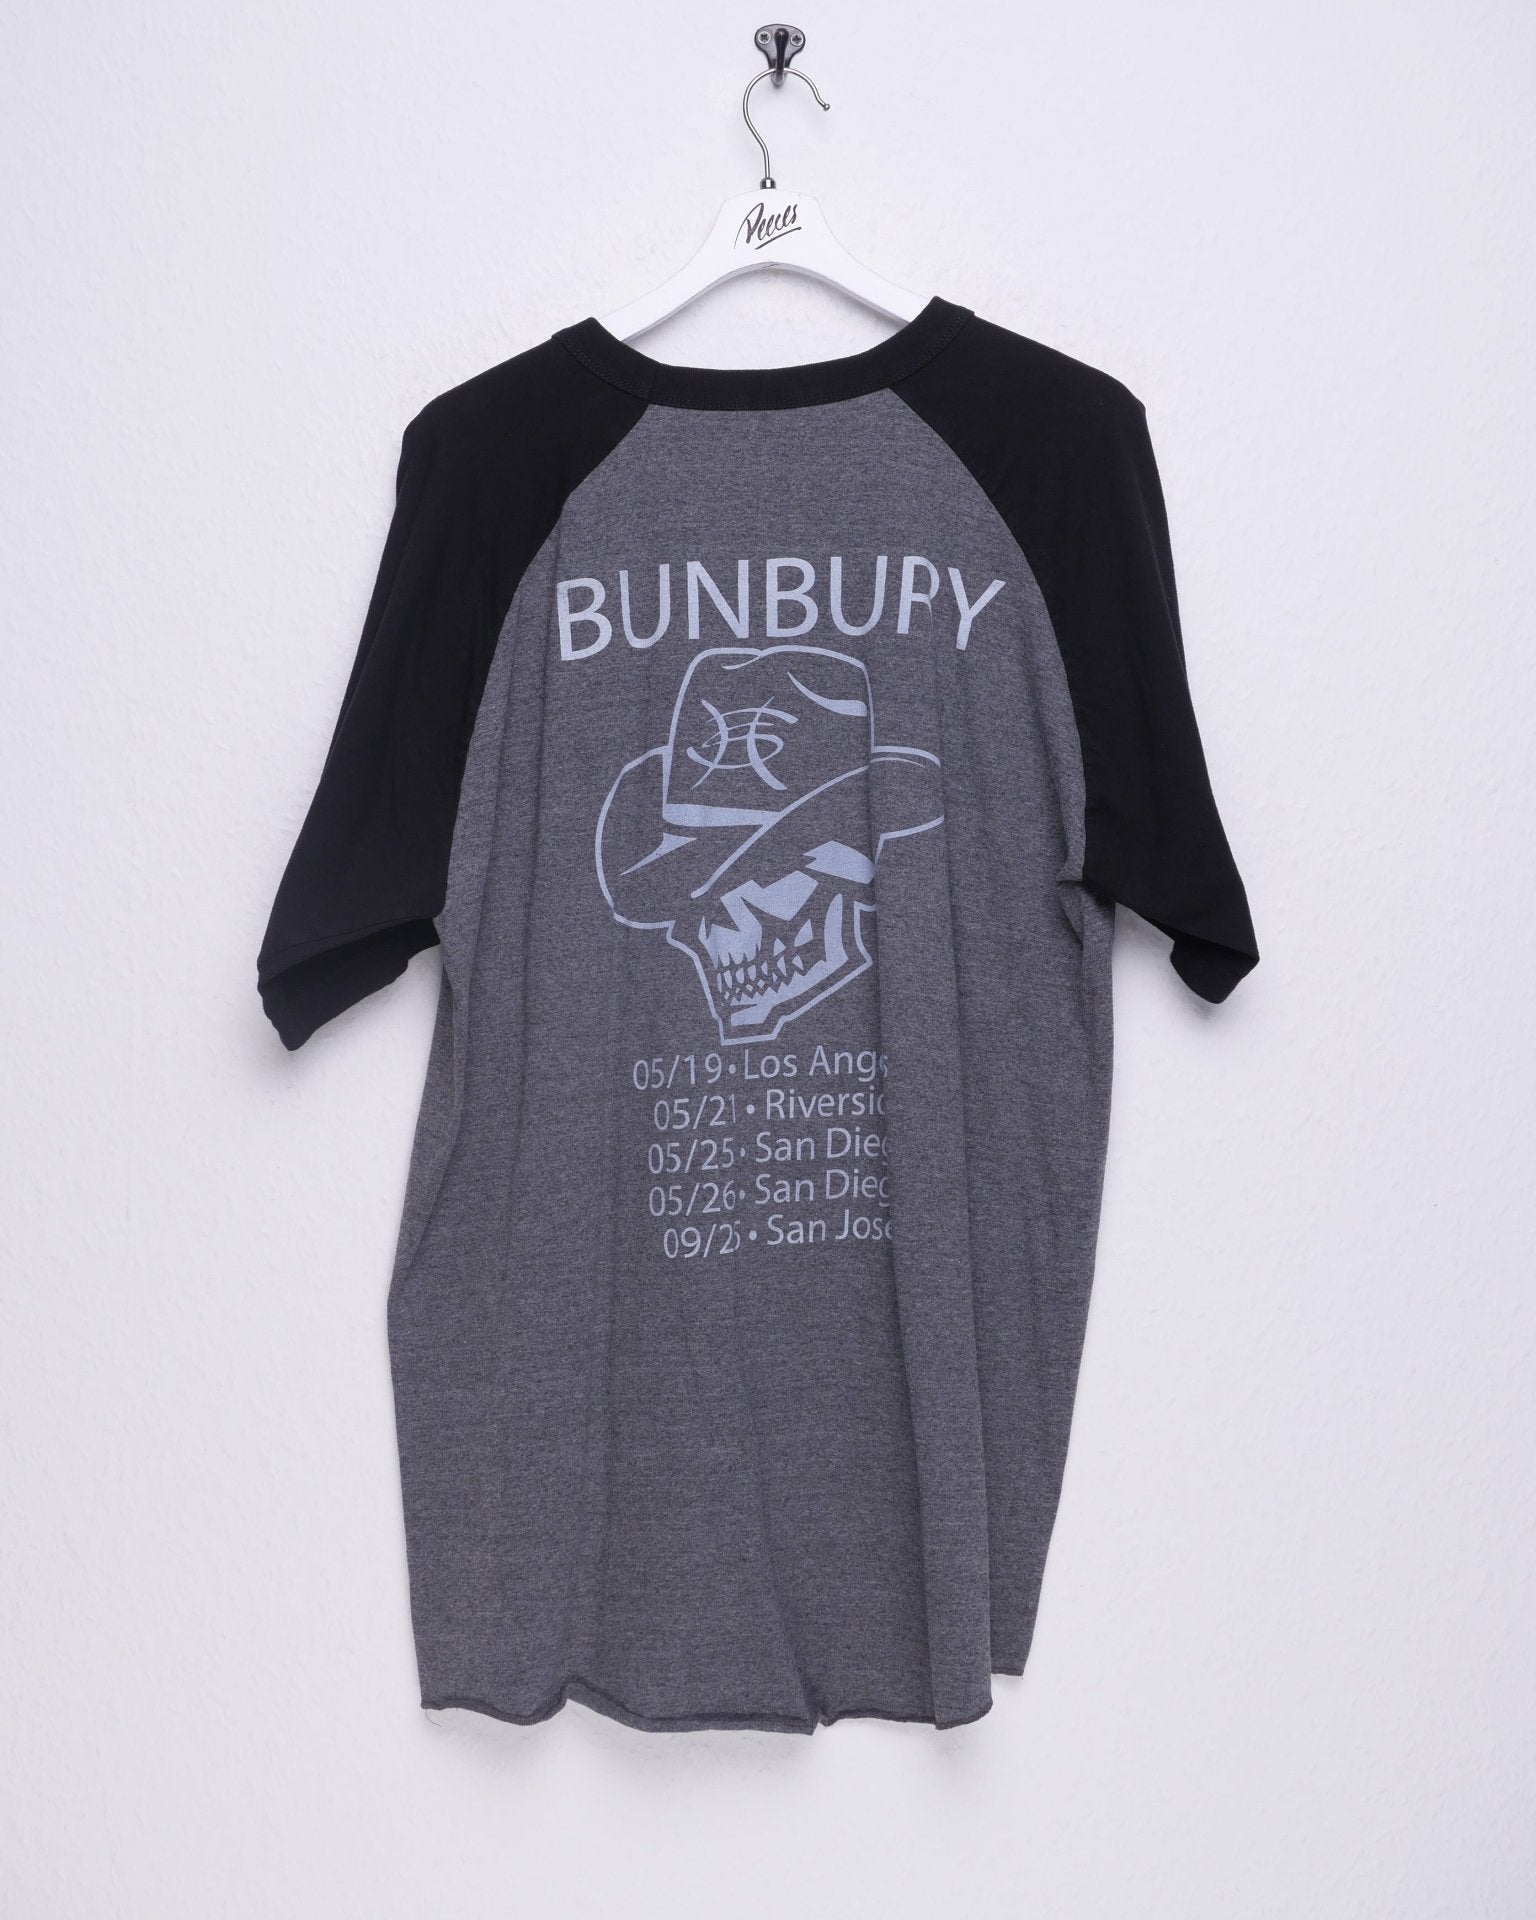 Bunbupy printed Graphic Vintage Shirt - Peeces